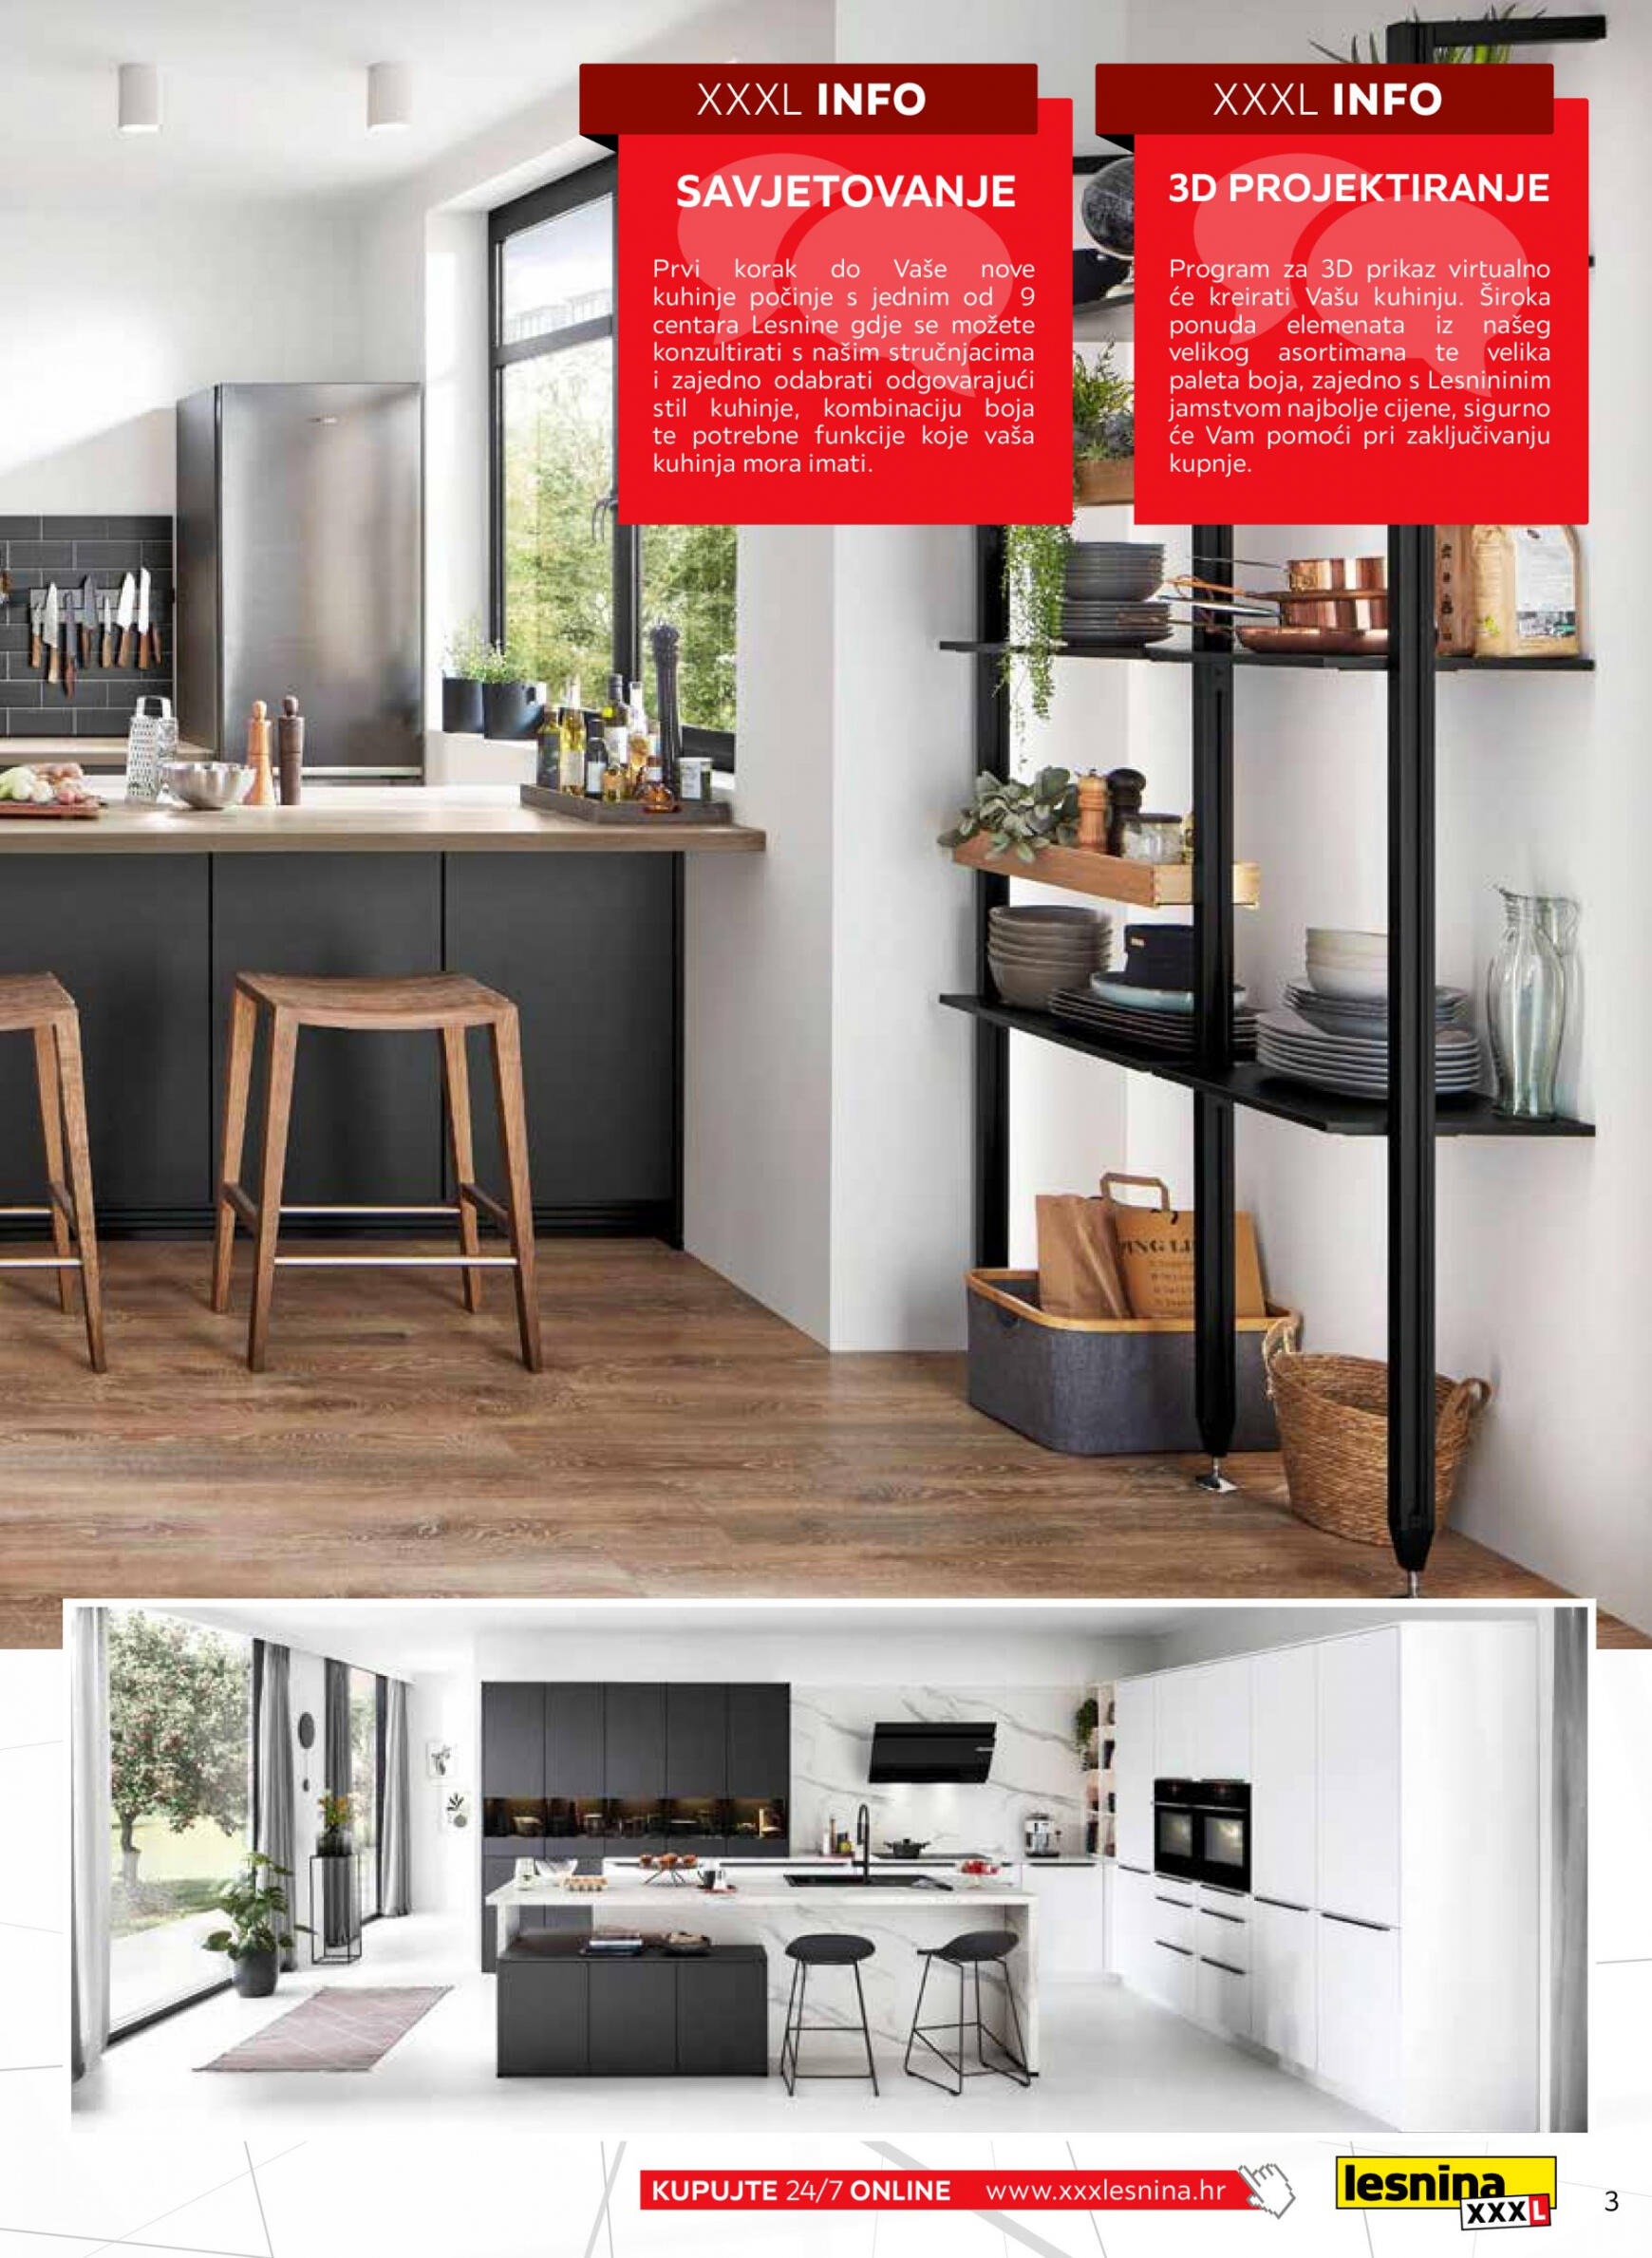 lesnina-xxxl - Novi katalog Lesnina XXXL - Super akcija kuhinja 26.03. - 25.04. - page: 3